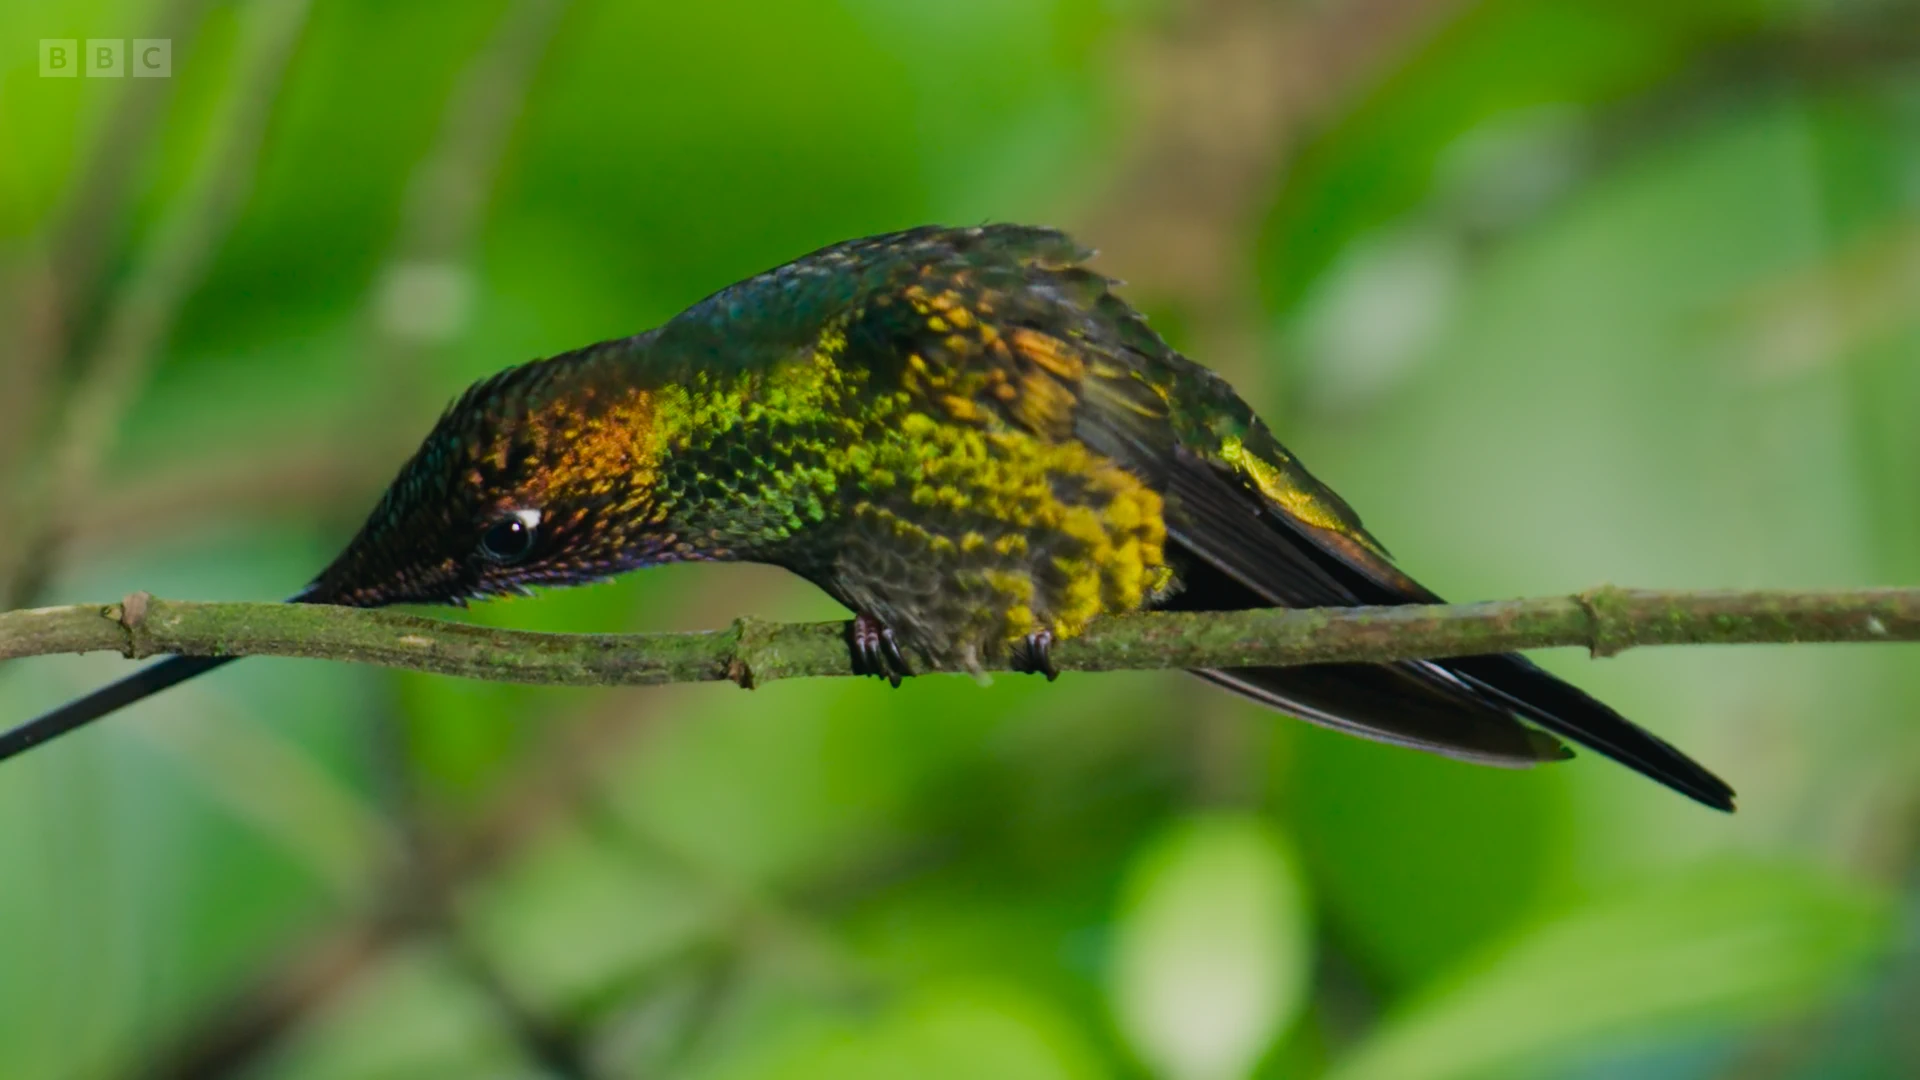 Sword-billed hummingbird (Ensifera ensifera) as shown in Planet Earth II - Jungles